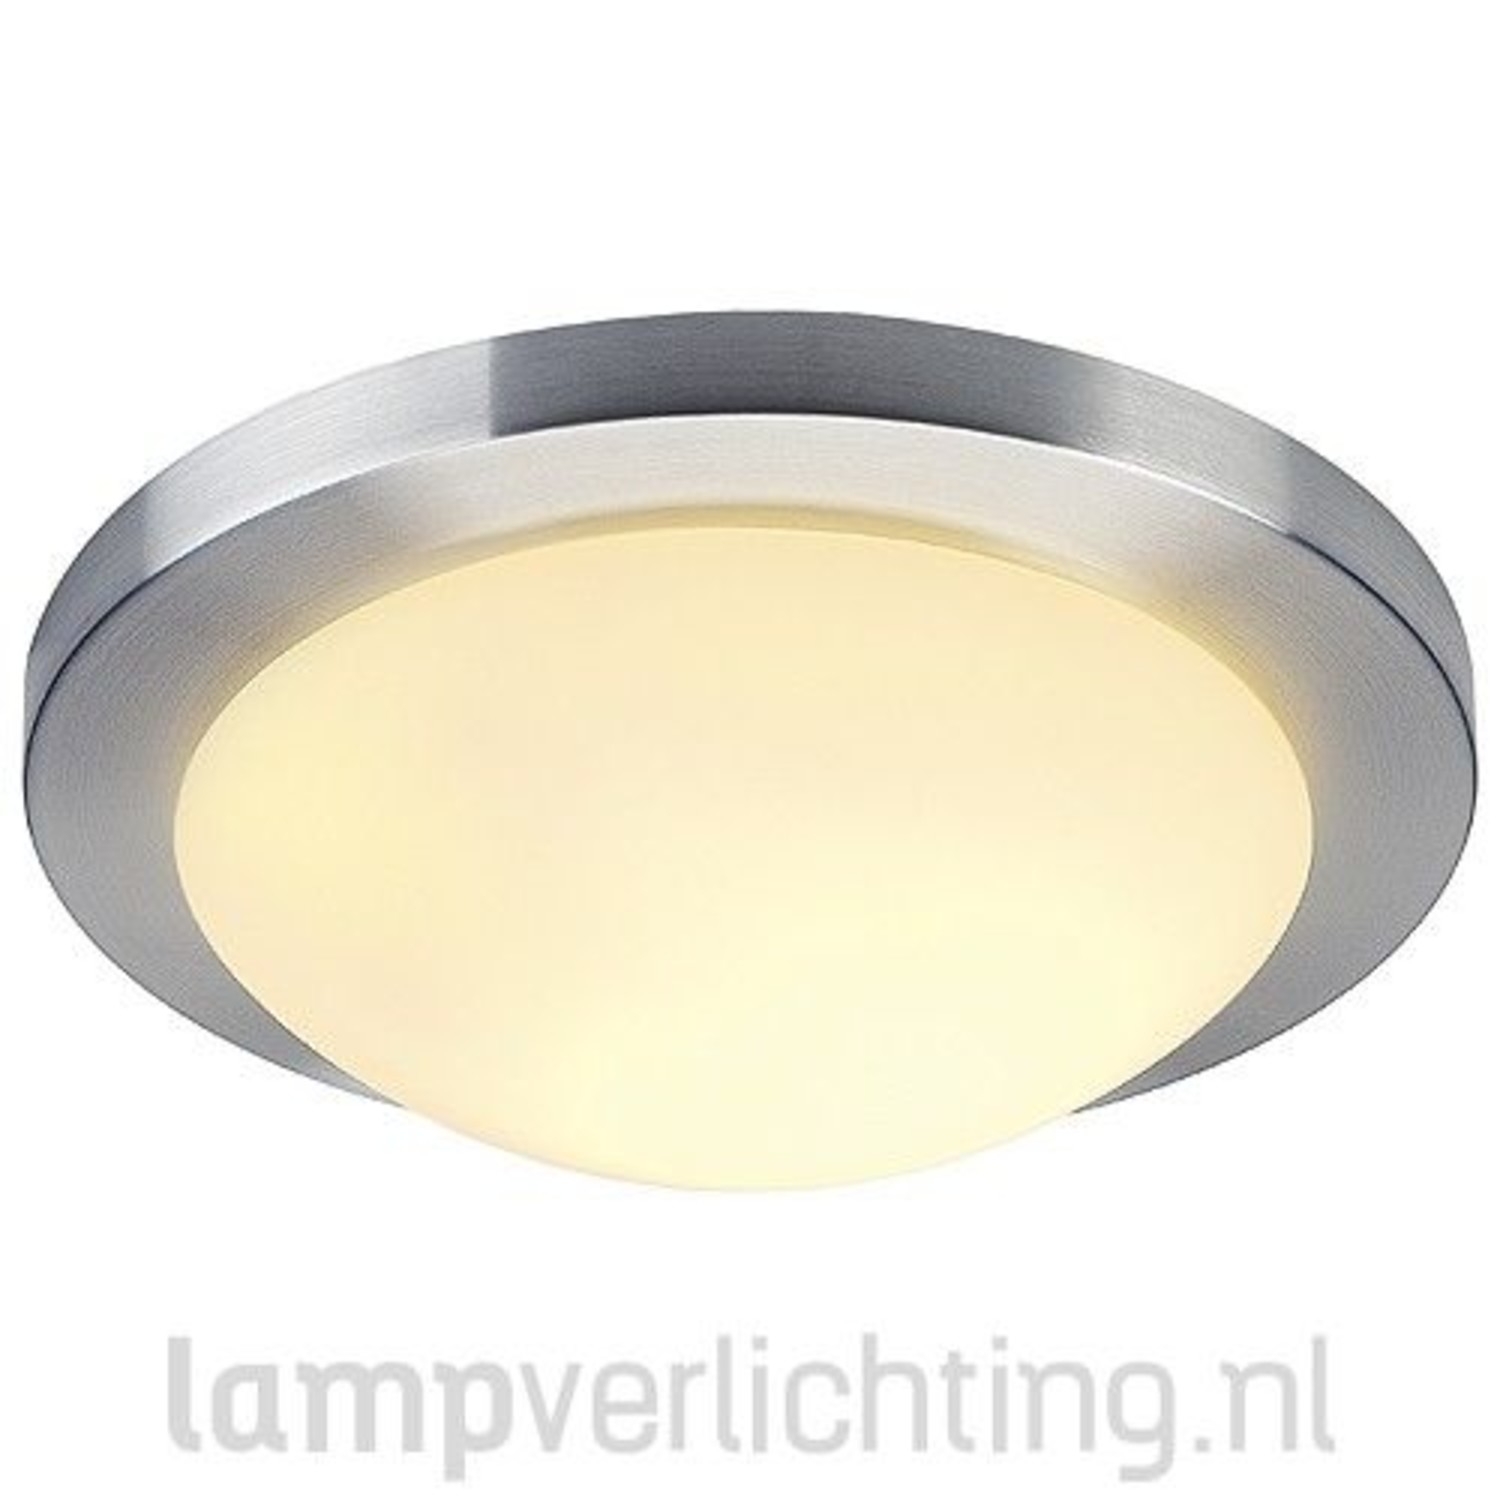 campagne Ideaal teer Plafondlamp Rond Glas - Ø 32 cm - Aluminium en Matglas - Tip -  LampVerlichting.nl